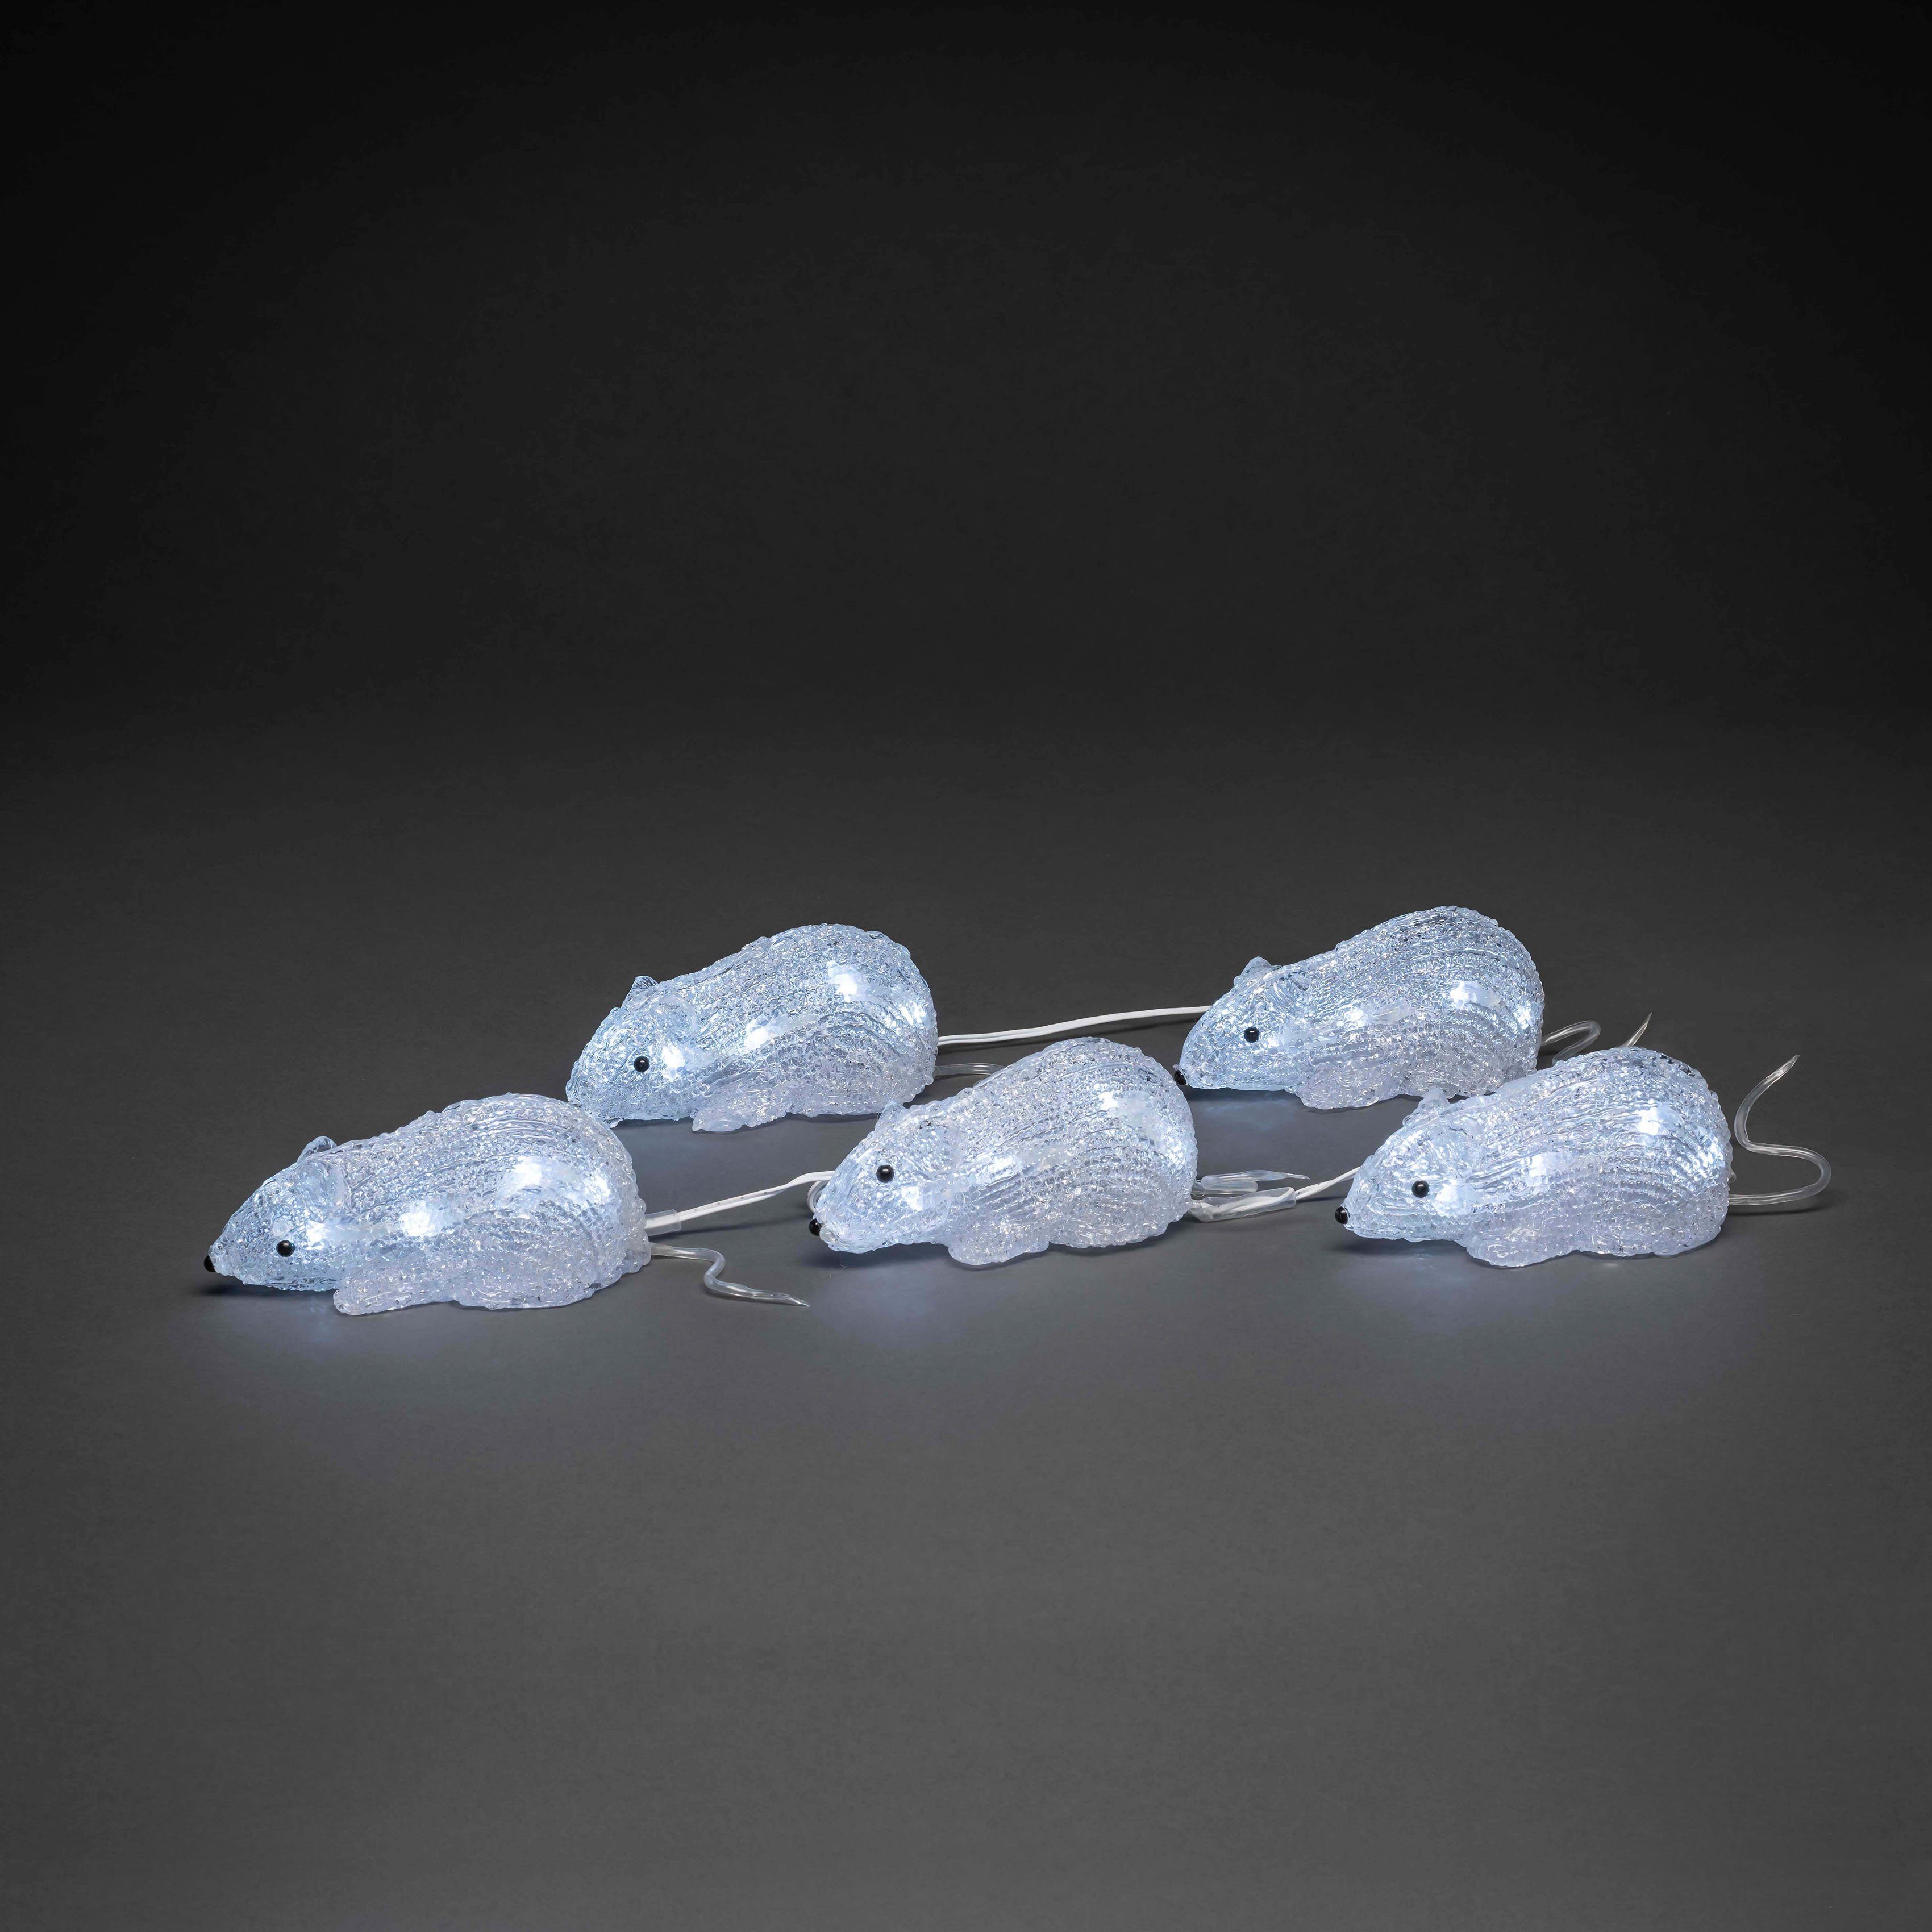 Mäuse, (1 Acryl kalt KONSTSMIDE 40 Weihnachtsfigur St), 5er-Set, Dioden weiße LED